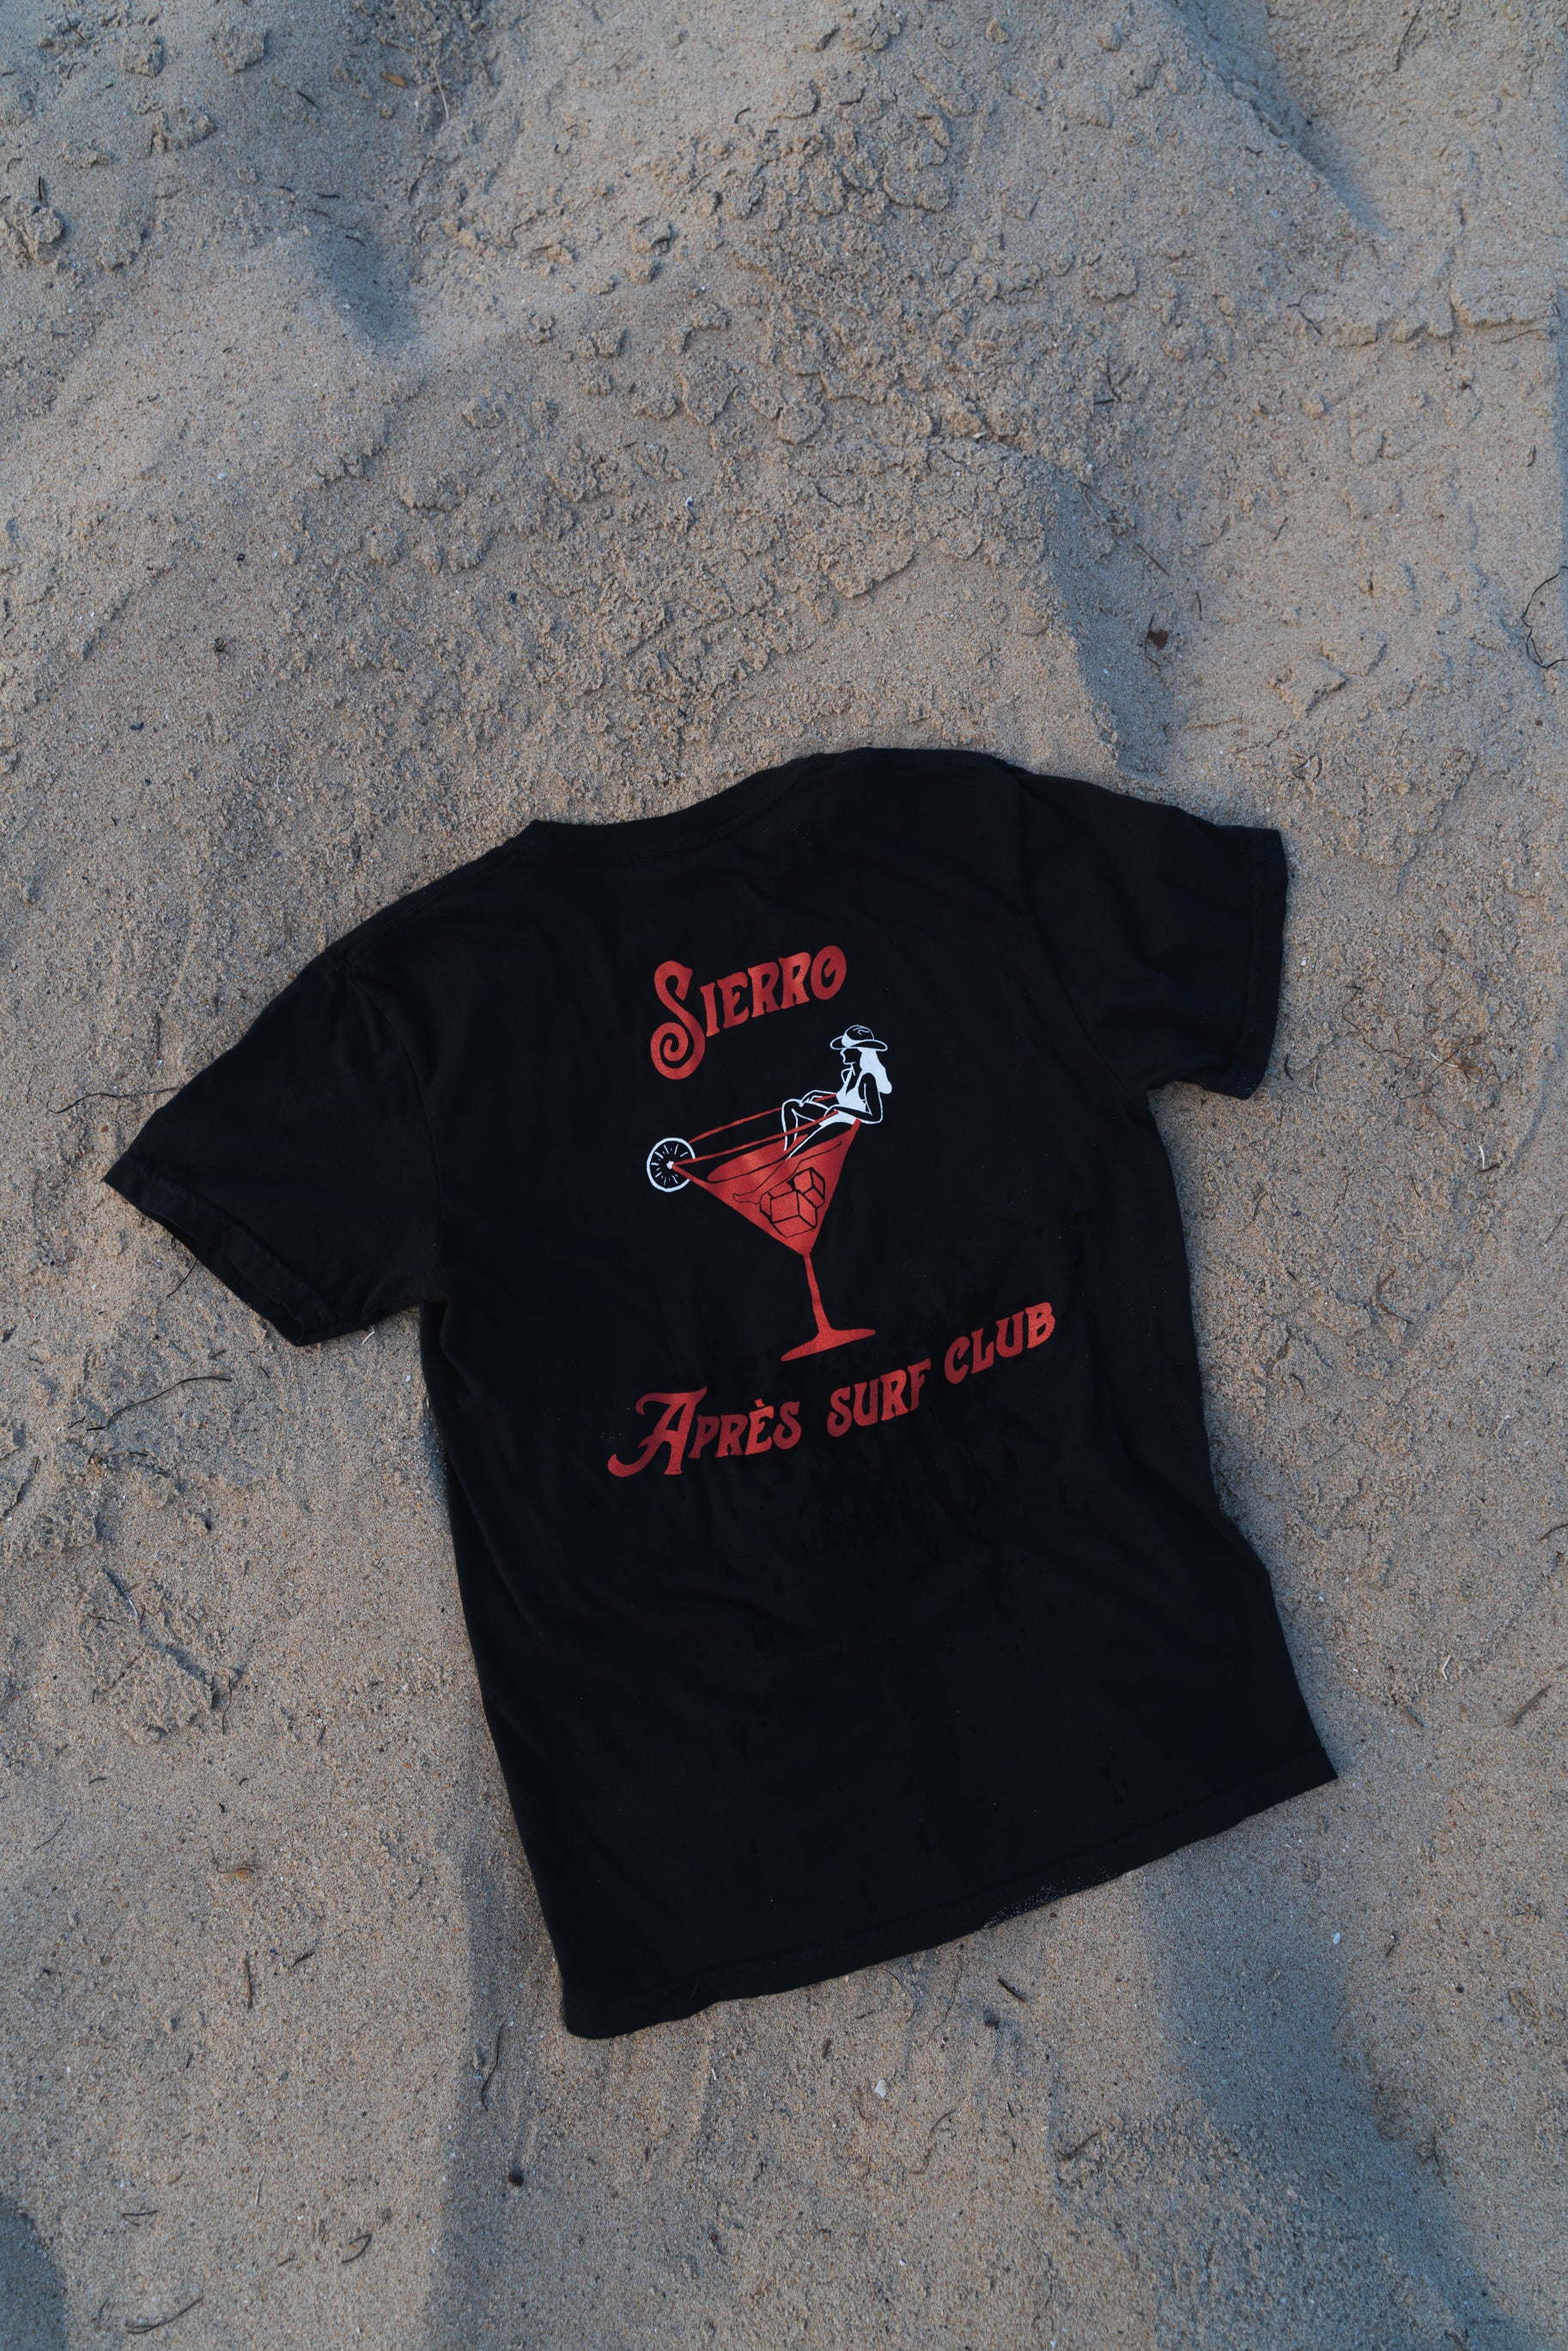 Aprés Surf Club Shirt Black